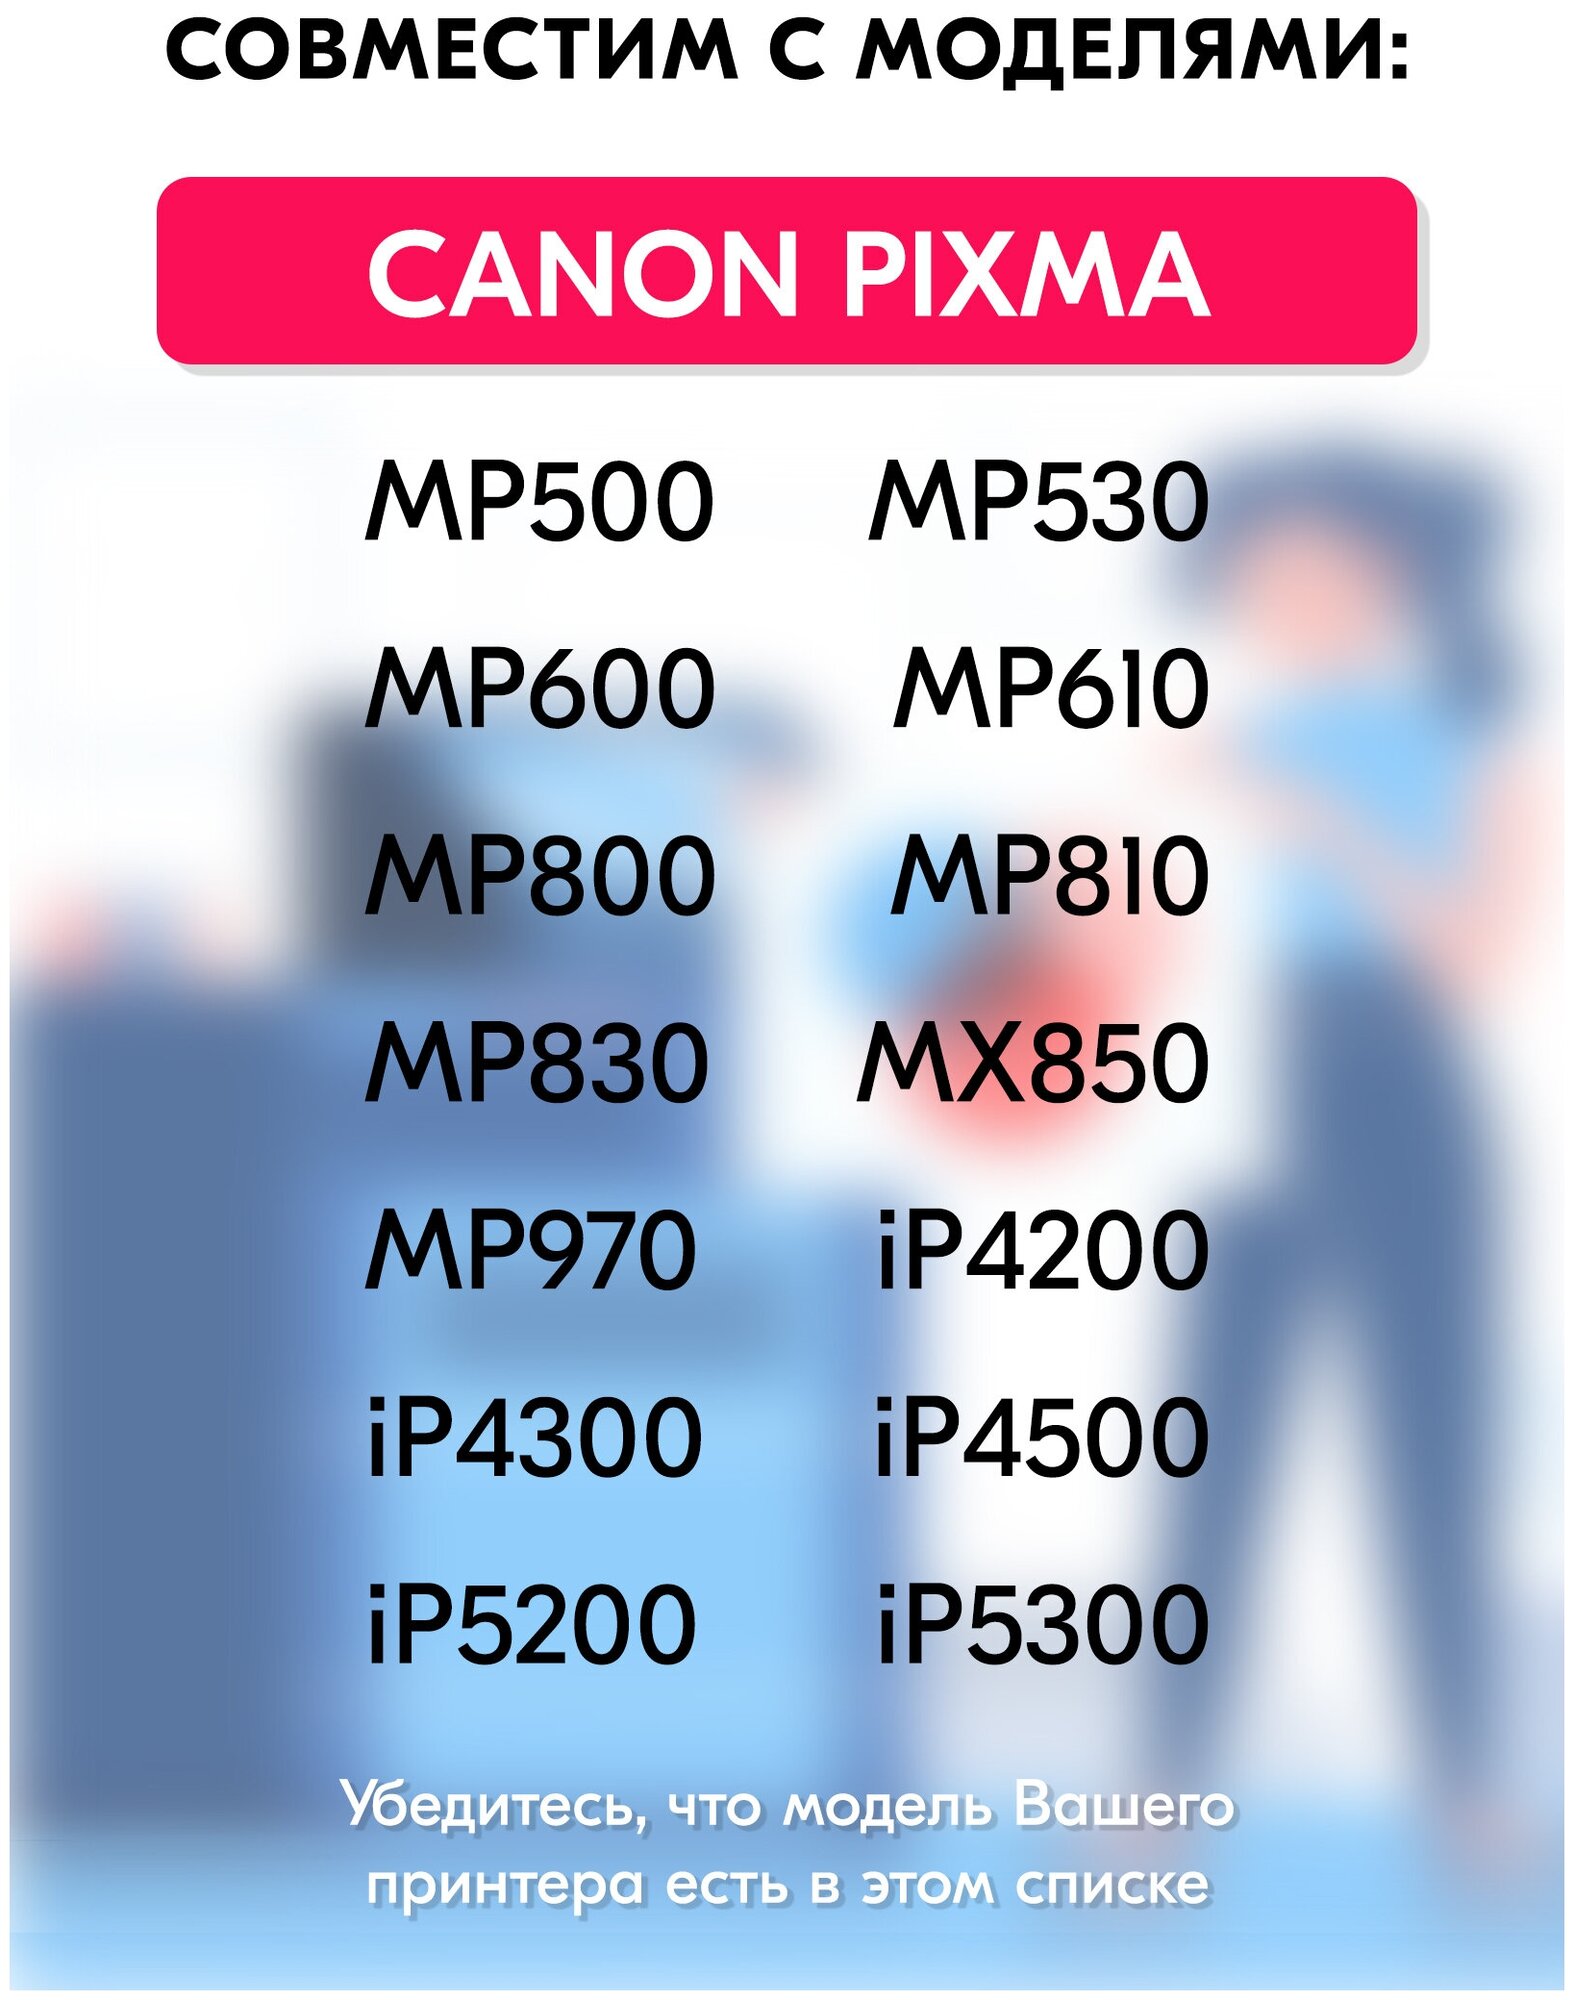 Комплект картриджей PGI-5/CLI-8 для Canon PIXMA-MP500-MP970, MX700-MX850, iP3300-iP6700, iX4000-iX5000, Pro9000, 5 цветов, совместимый